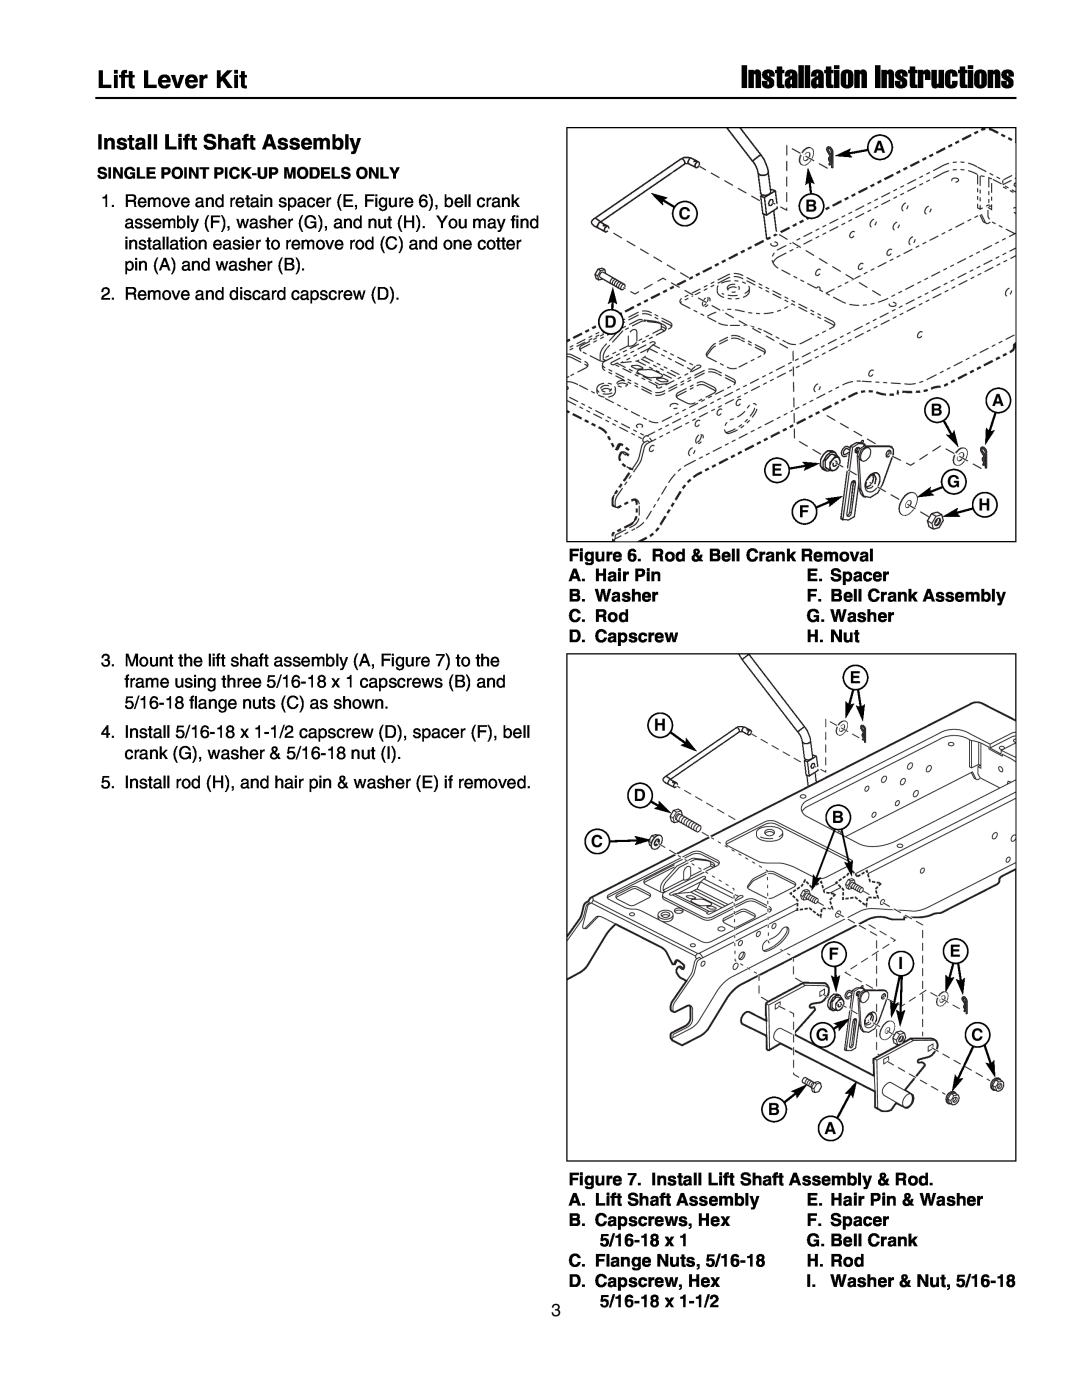 Snapper 1694947 installation instructions Lift Lever Kit, Install Lift Shaft Assembly, Installation Instructions 